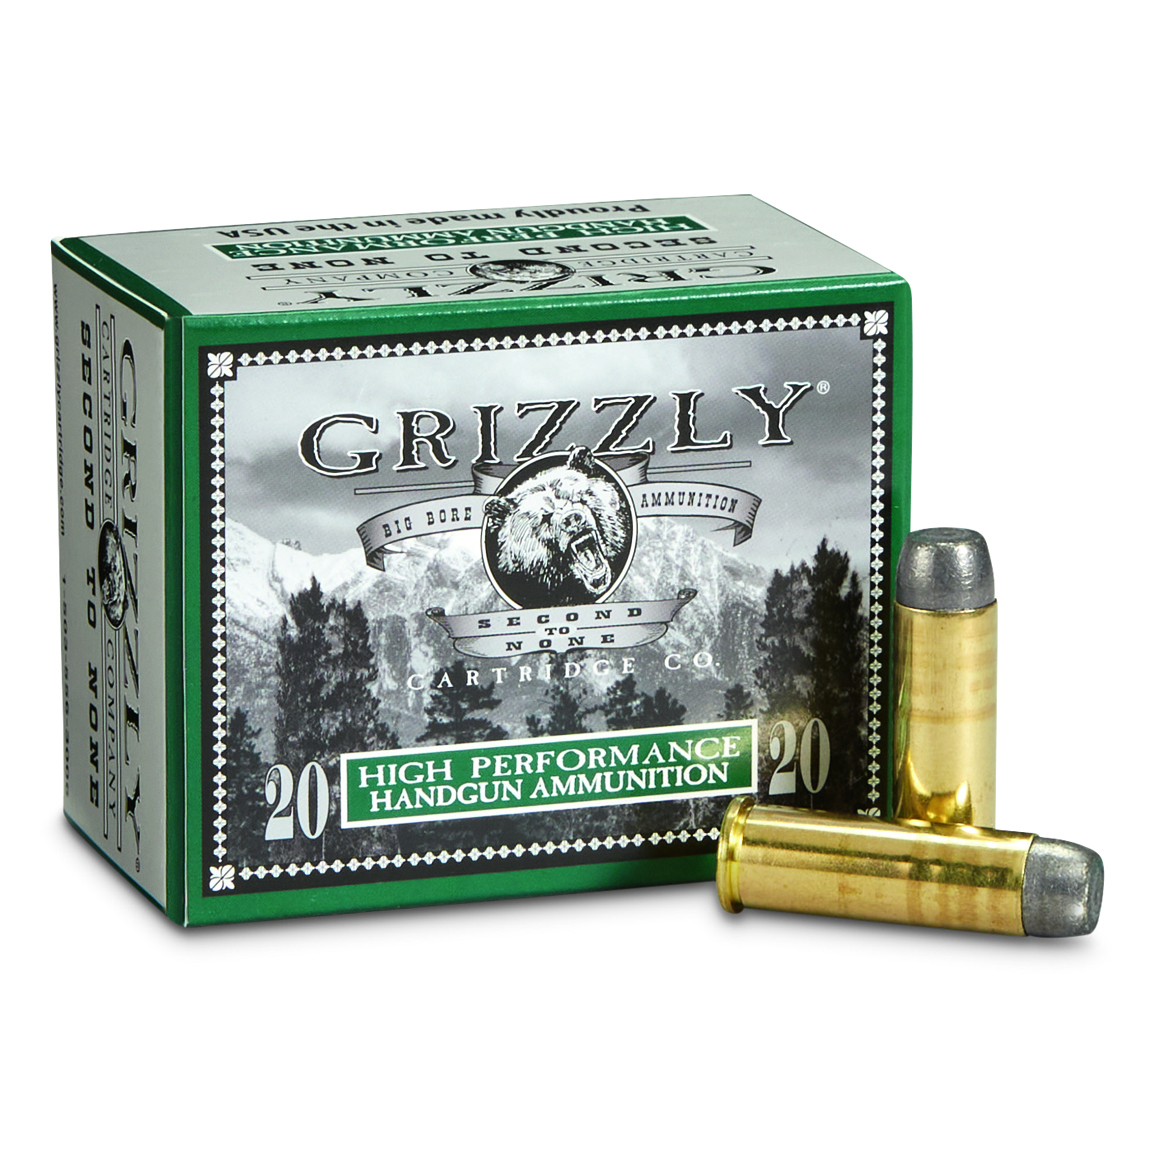 Grizzly Cartridge Co. High Performance Handgun, .41 Magnum, WFNGC, 250 Grain, 20 Rounds